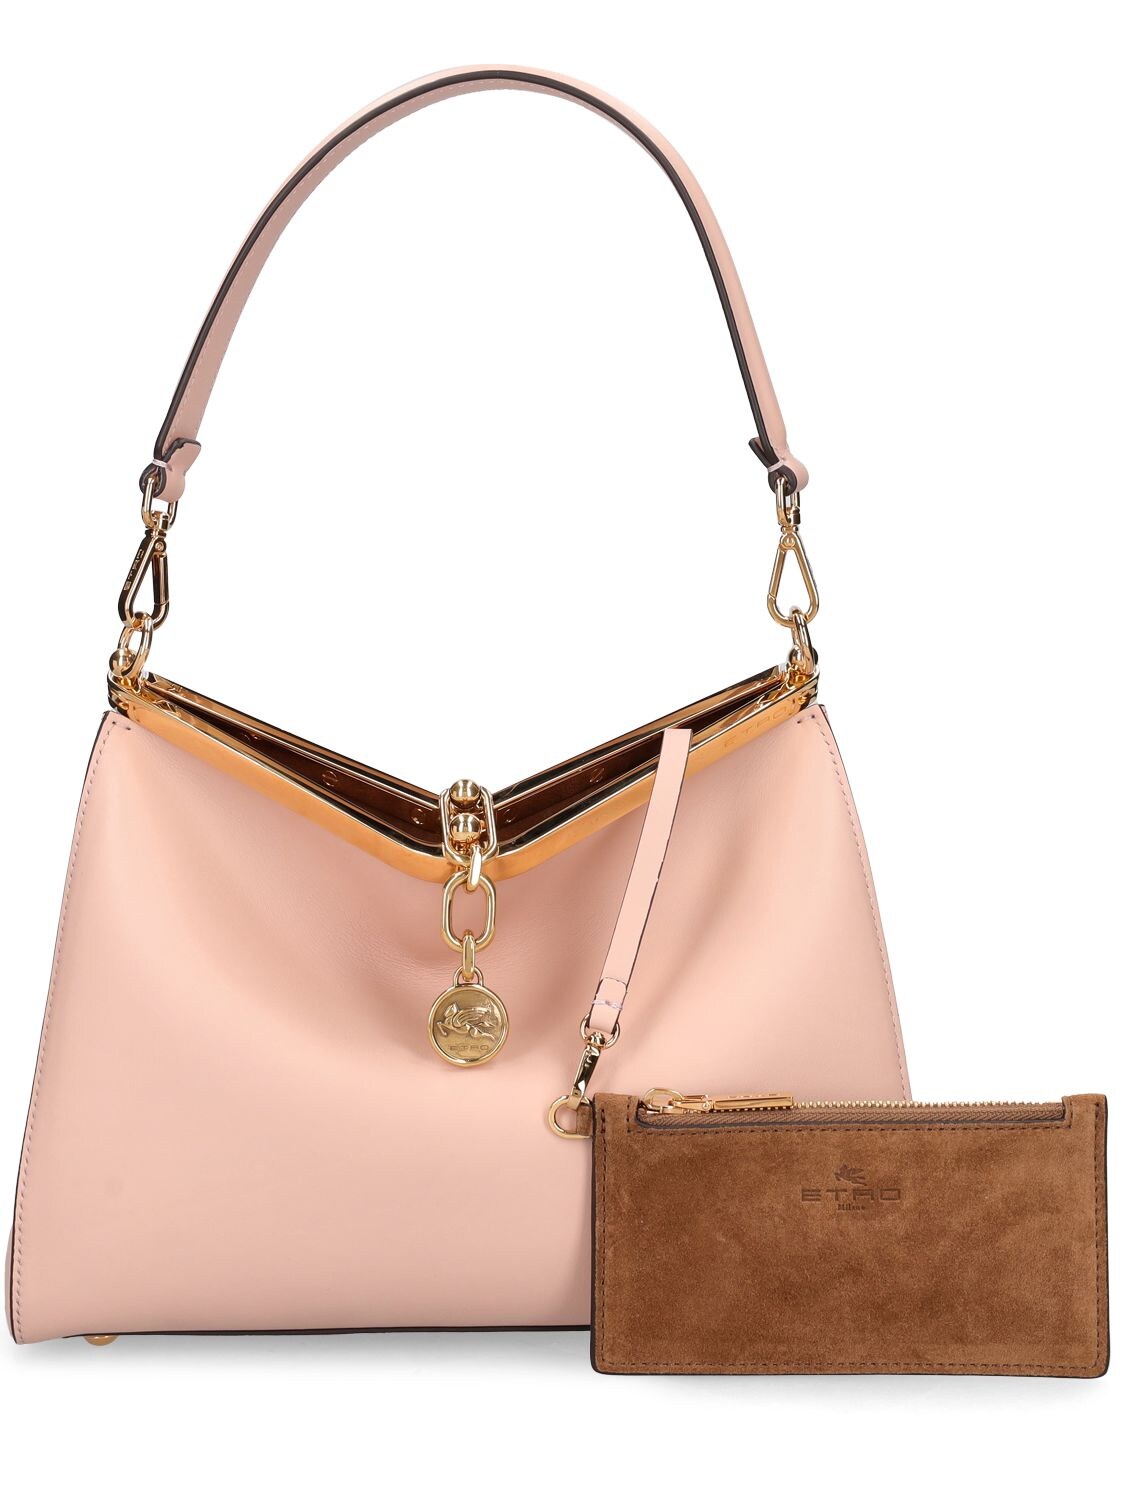 Medium vela leather shoulder bag - Etro - Women